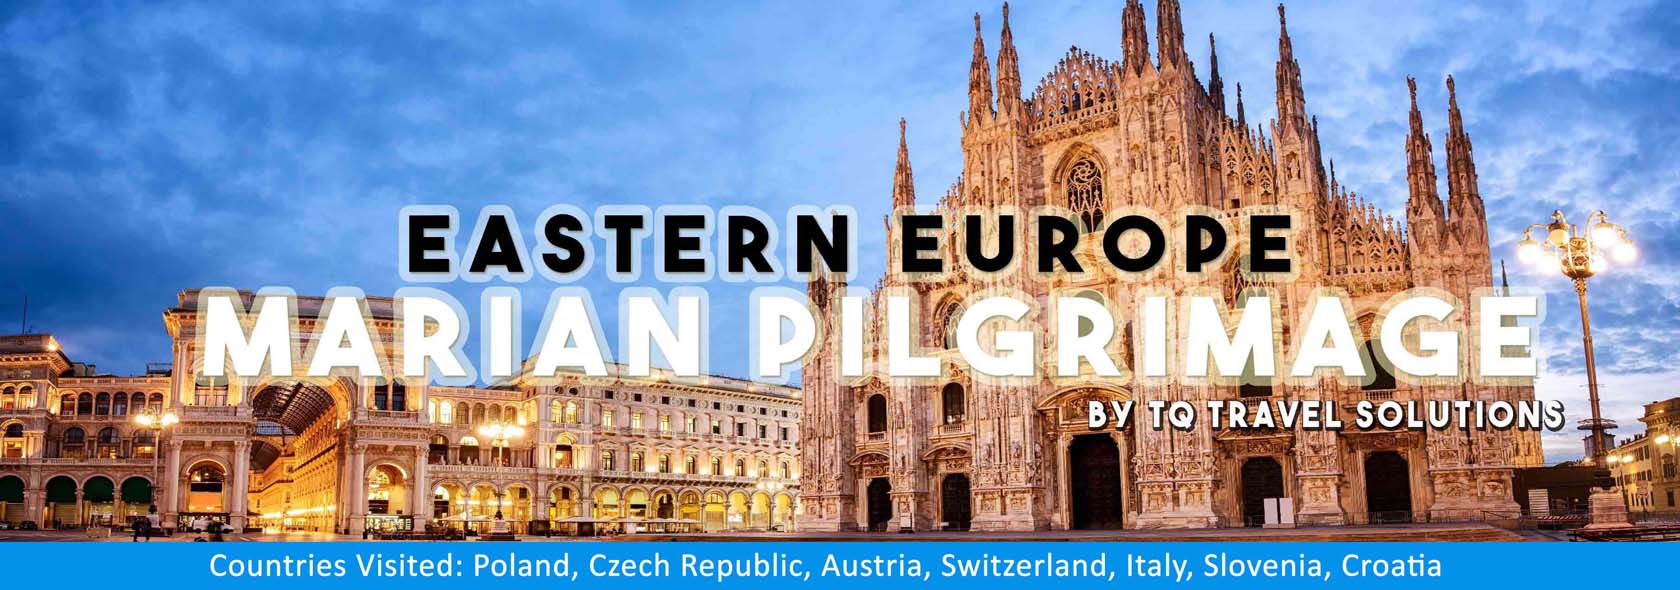 TQ Travel Solutions, Eastern Europe Marian Pilgrimage Tour 2020, budget ...